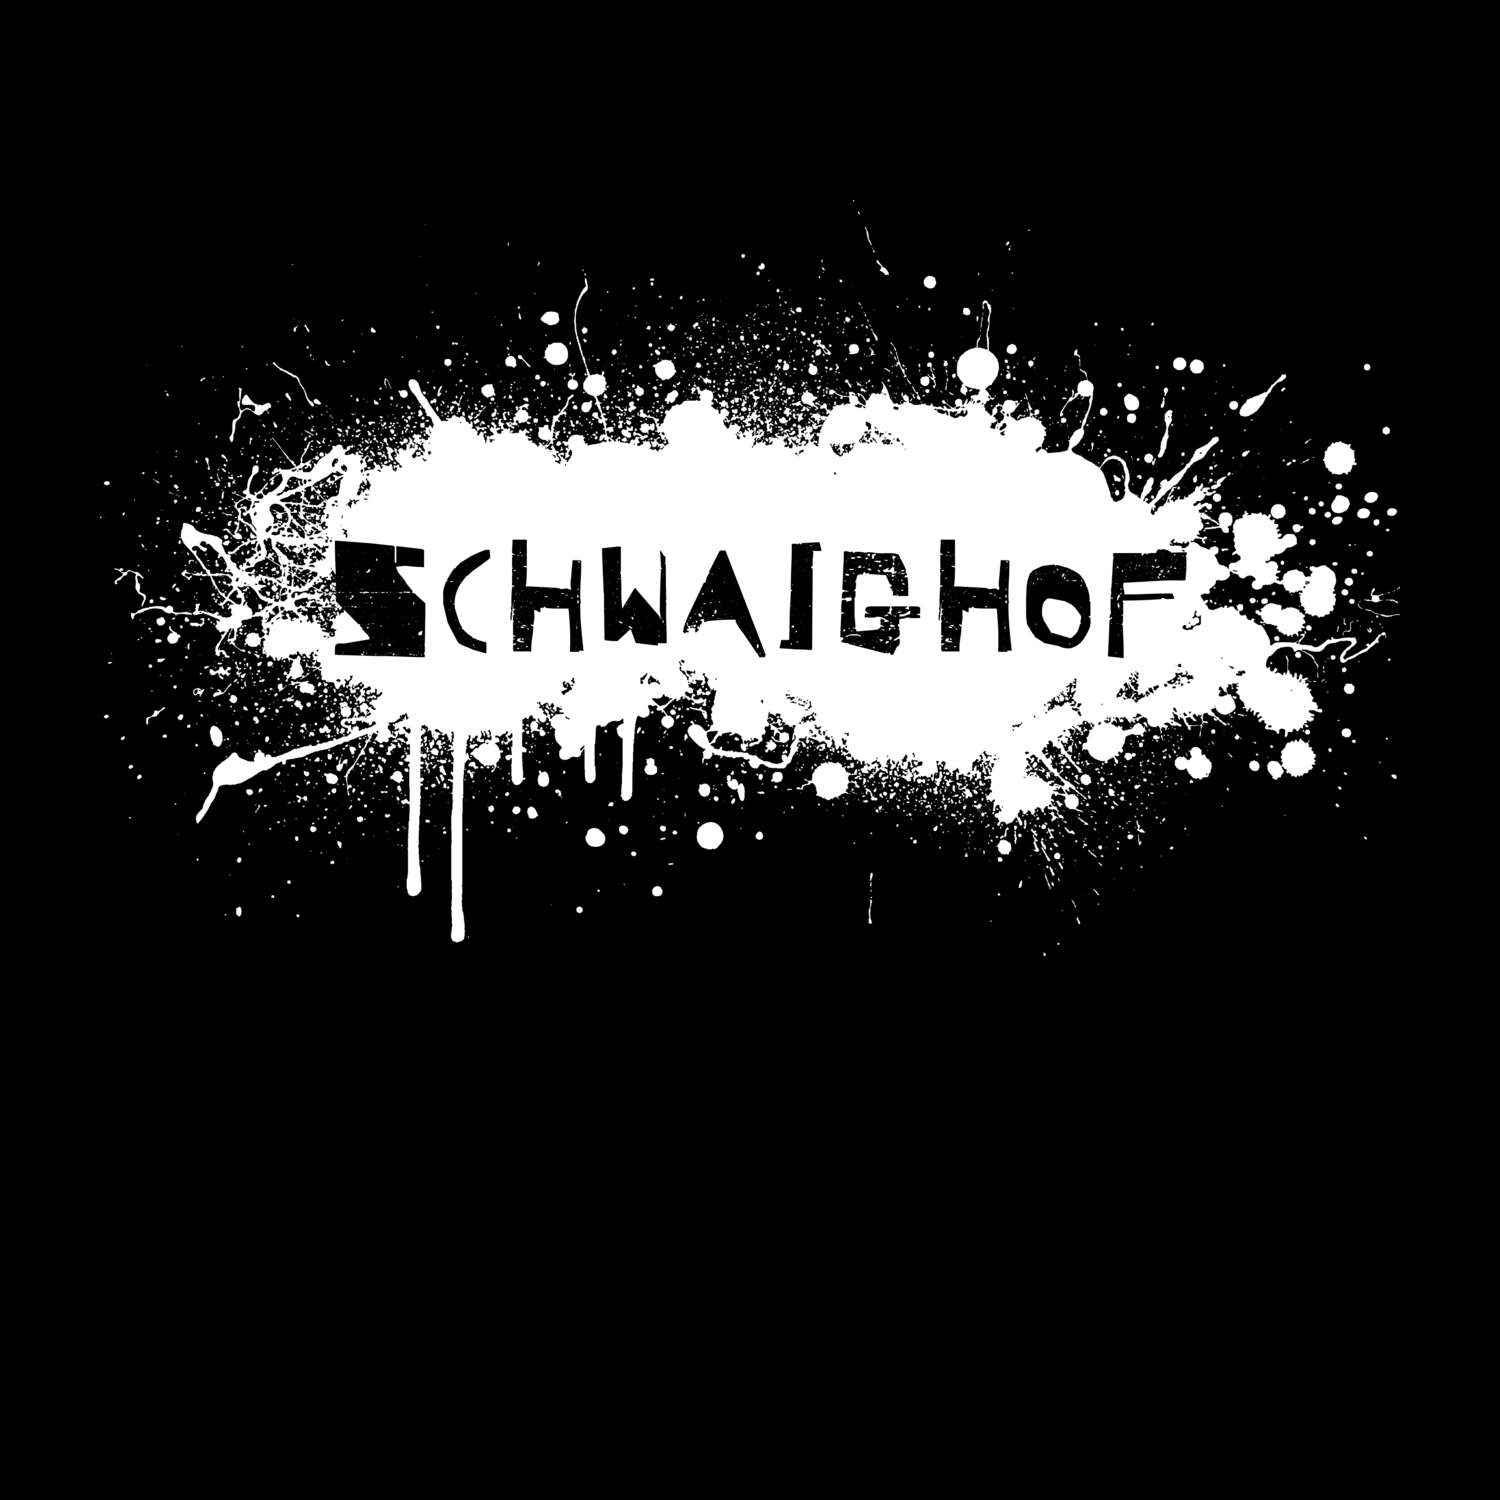 Schwaighof T-Shirt »Paint Splash Punk«